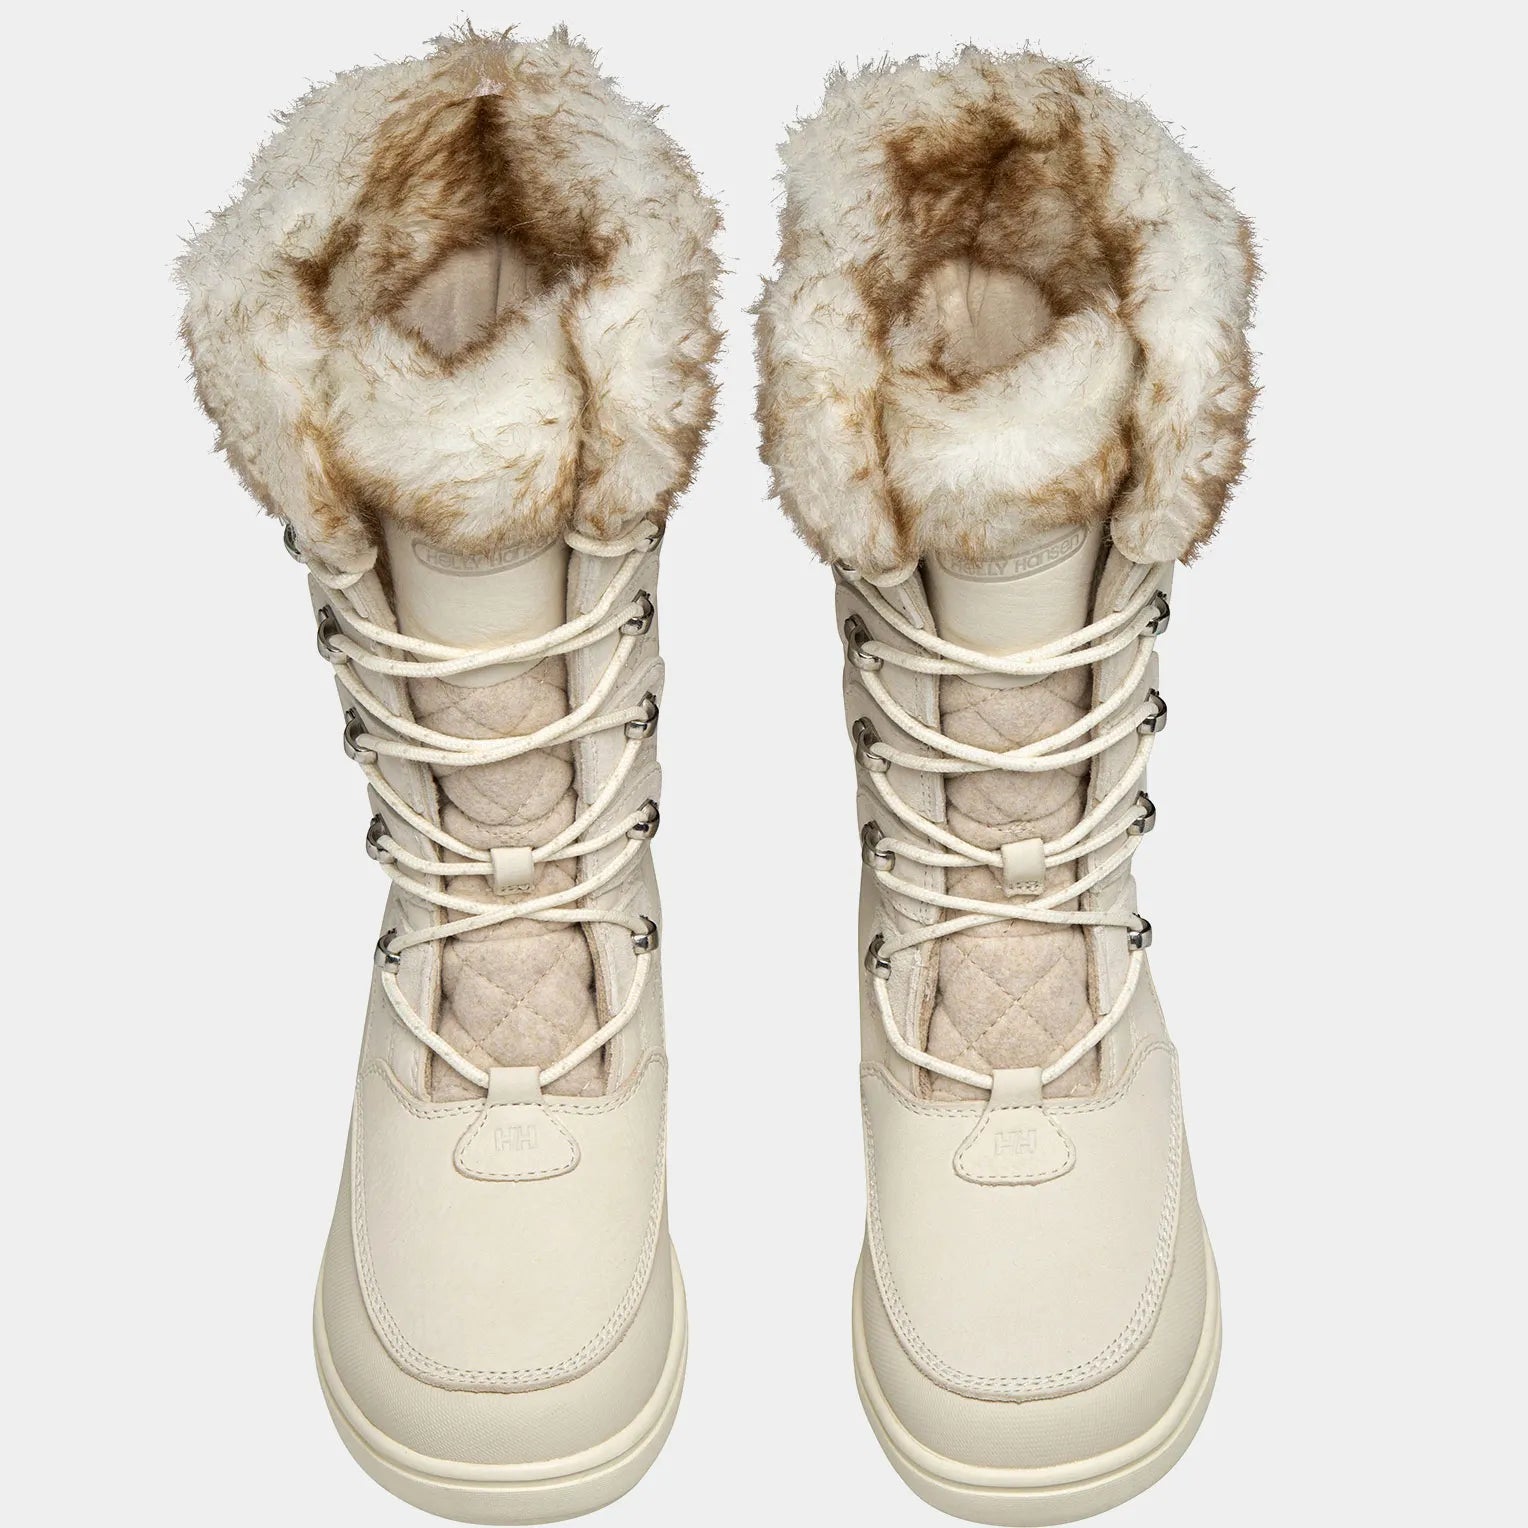 Helly Hansen Women's Garibaldi VL Insulated Winter Boots Cream - FULLSEND SKI AND OUTDOOR